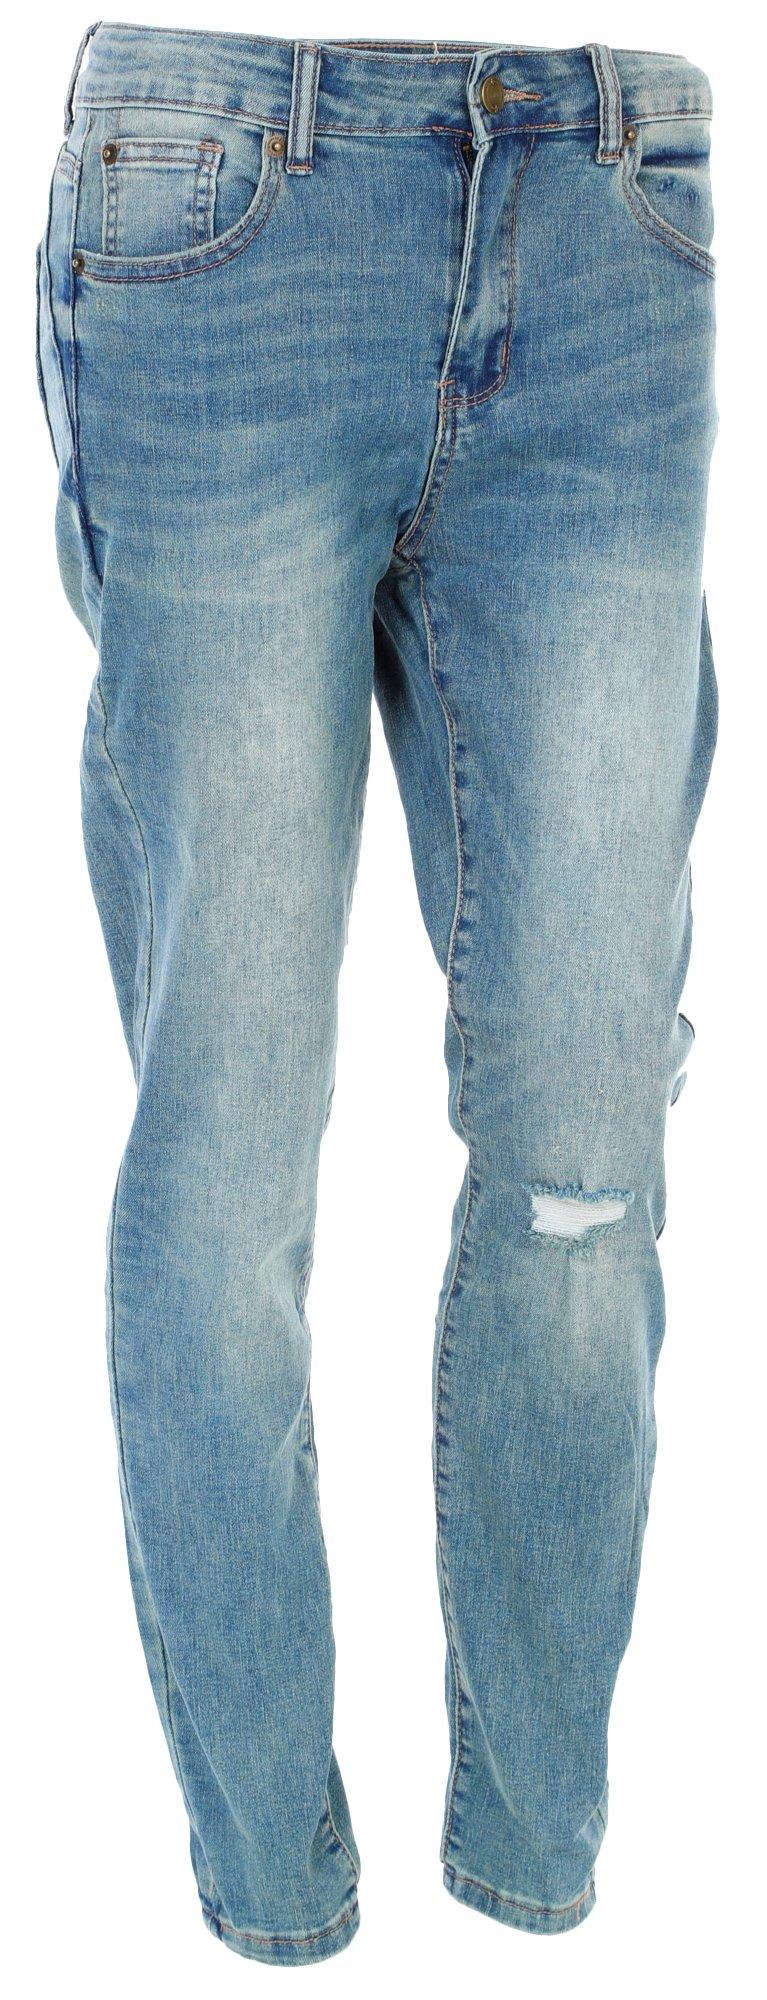 Redbat High Rise Super Skinny Jeans Blue Light Wash Womens Size 14